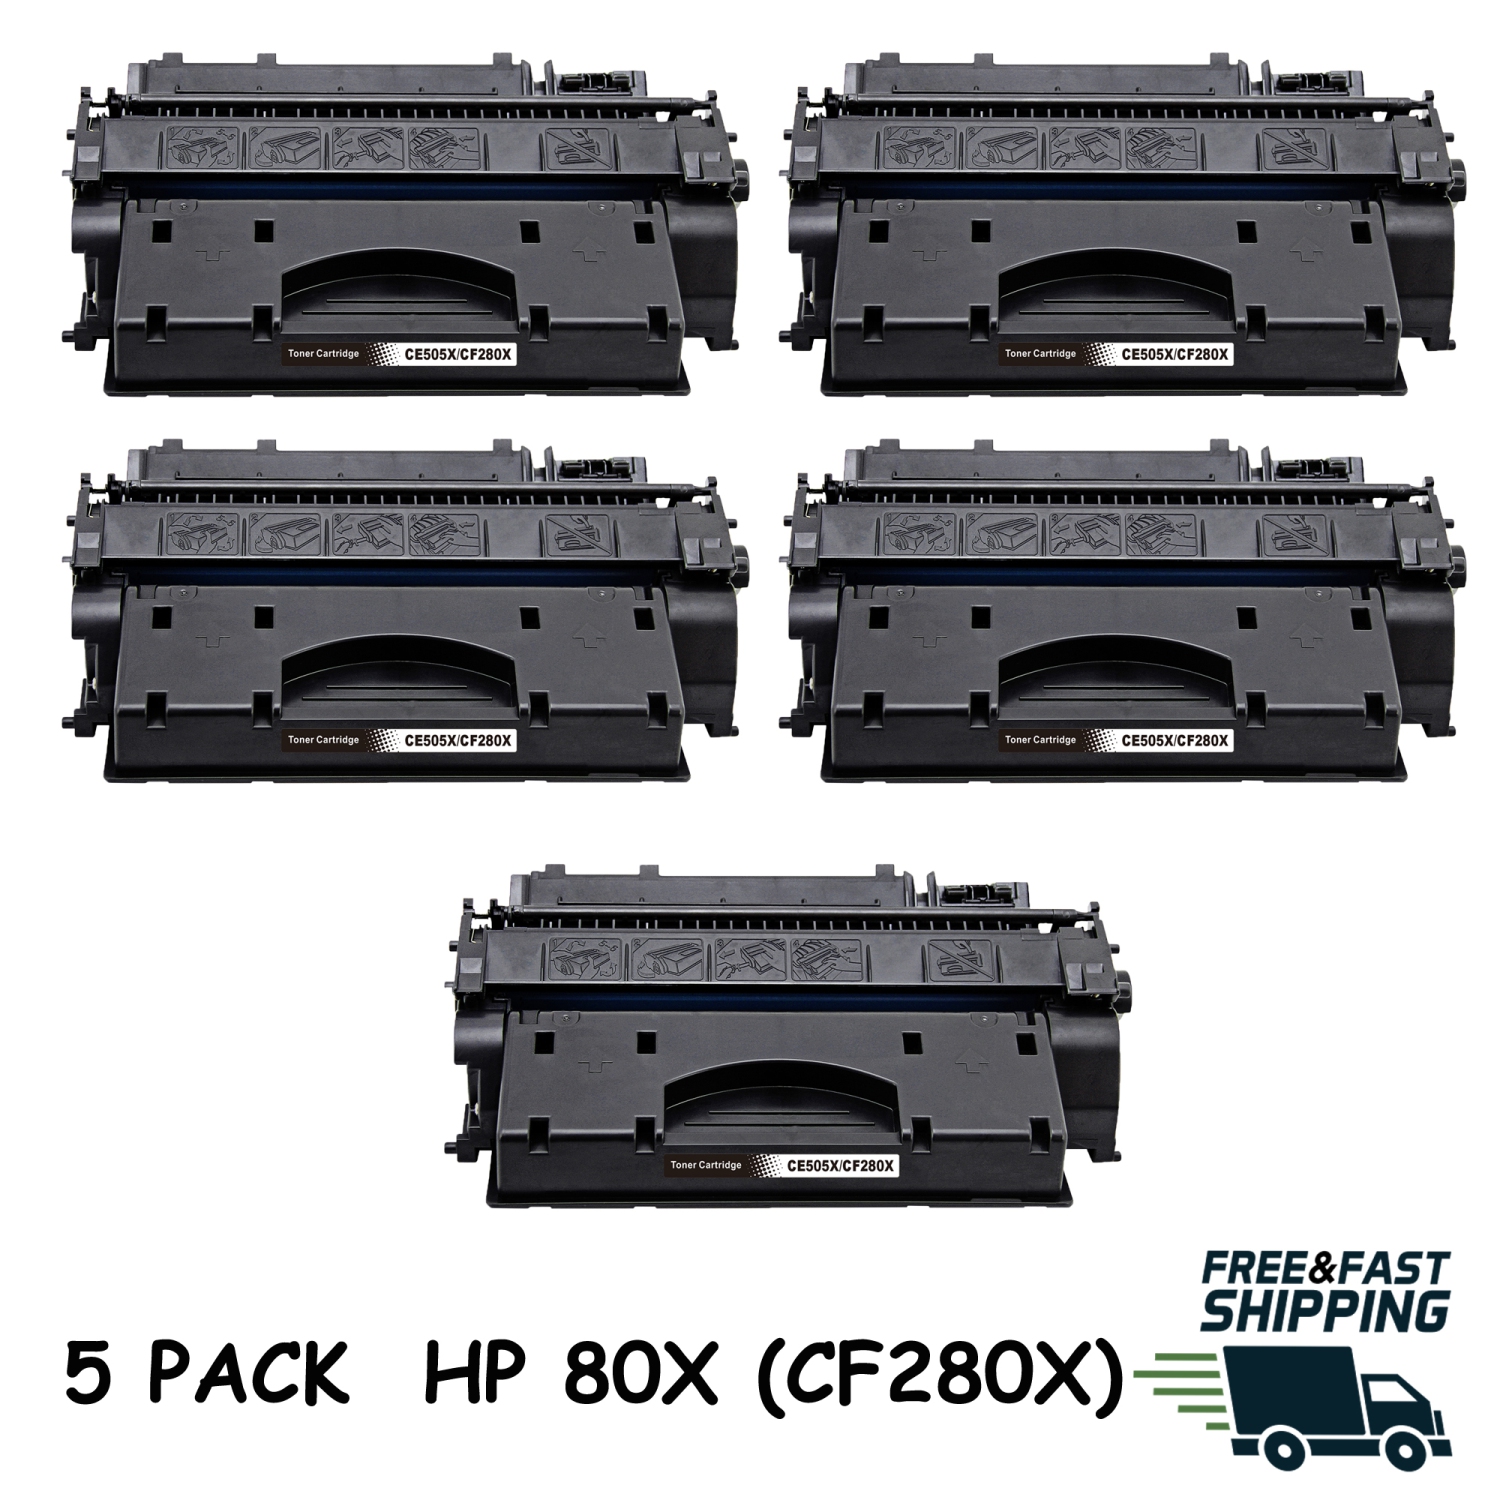 Bestoner™ 5 PK HP 80X (CF280X)/hp80x/80x/HP80X/80X/CF280X/cf280x/cf280/280/80A/80 HP LaserJet Pro M401 M425d